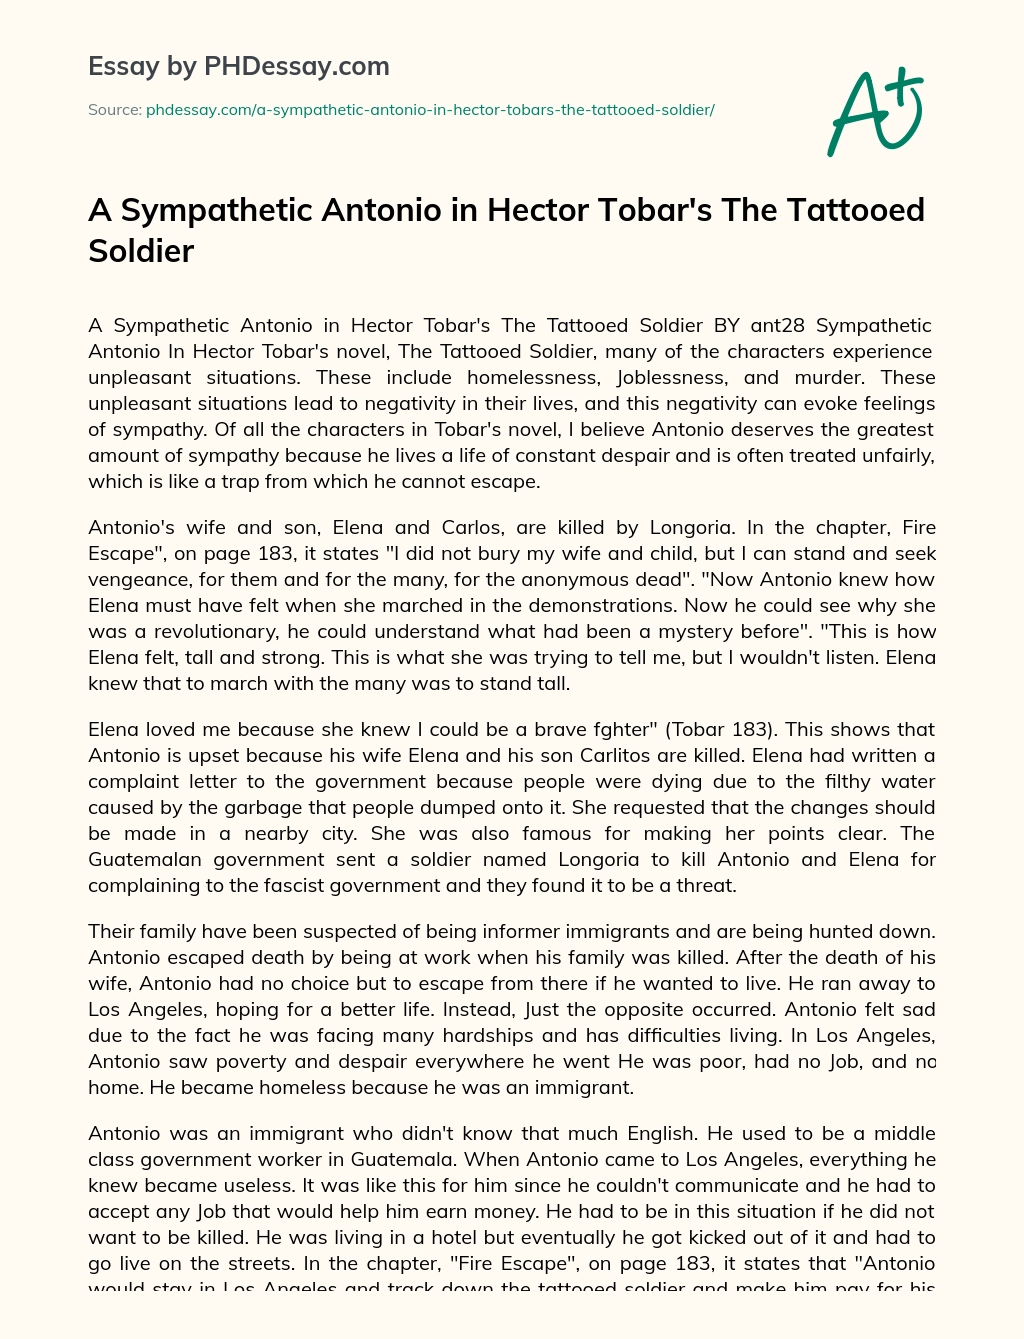 A Sympathetic Antonio in Hector Tobar’s The Tattooed Soldier essay